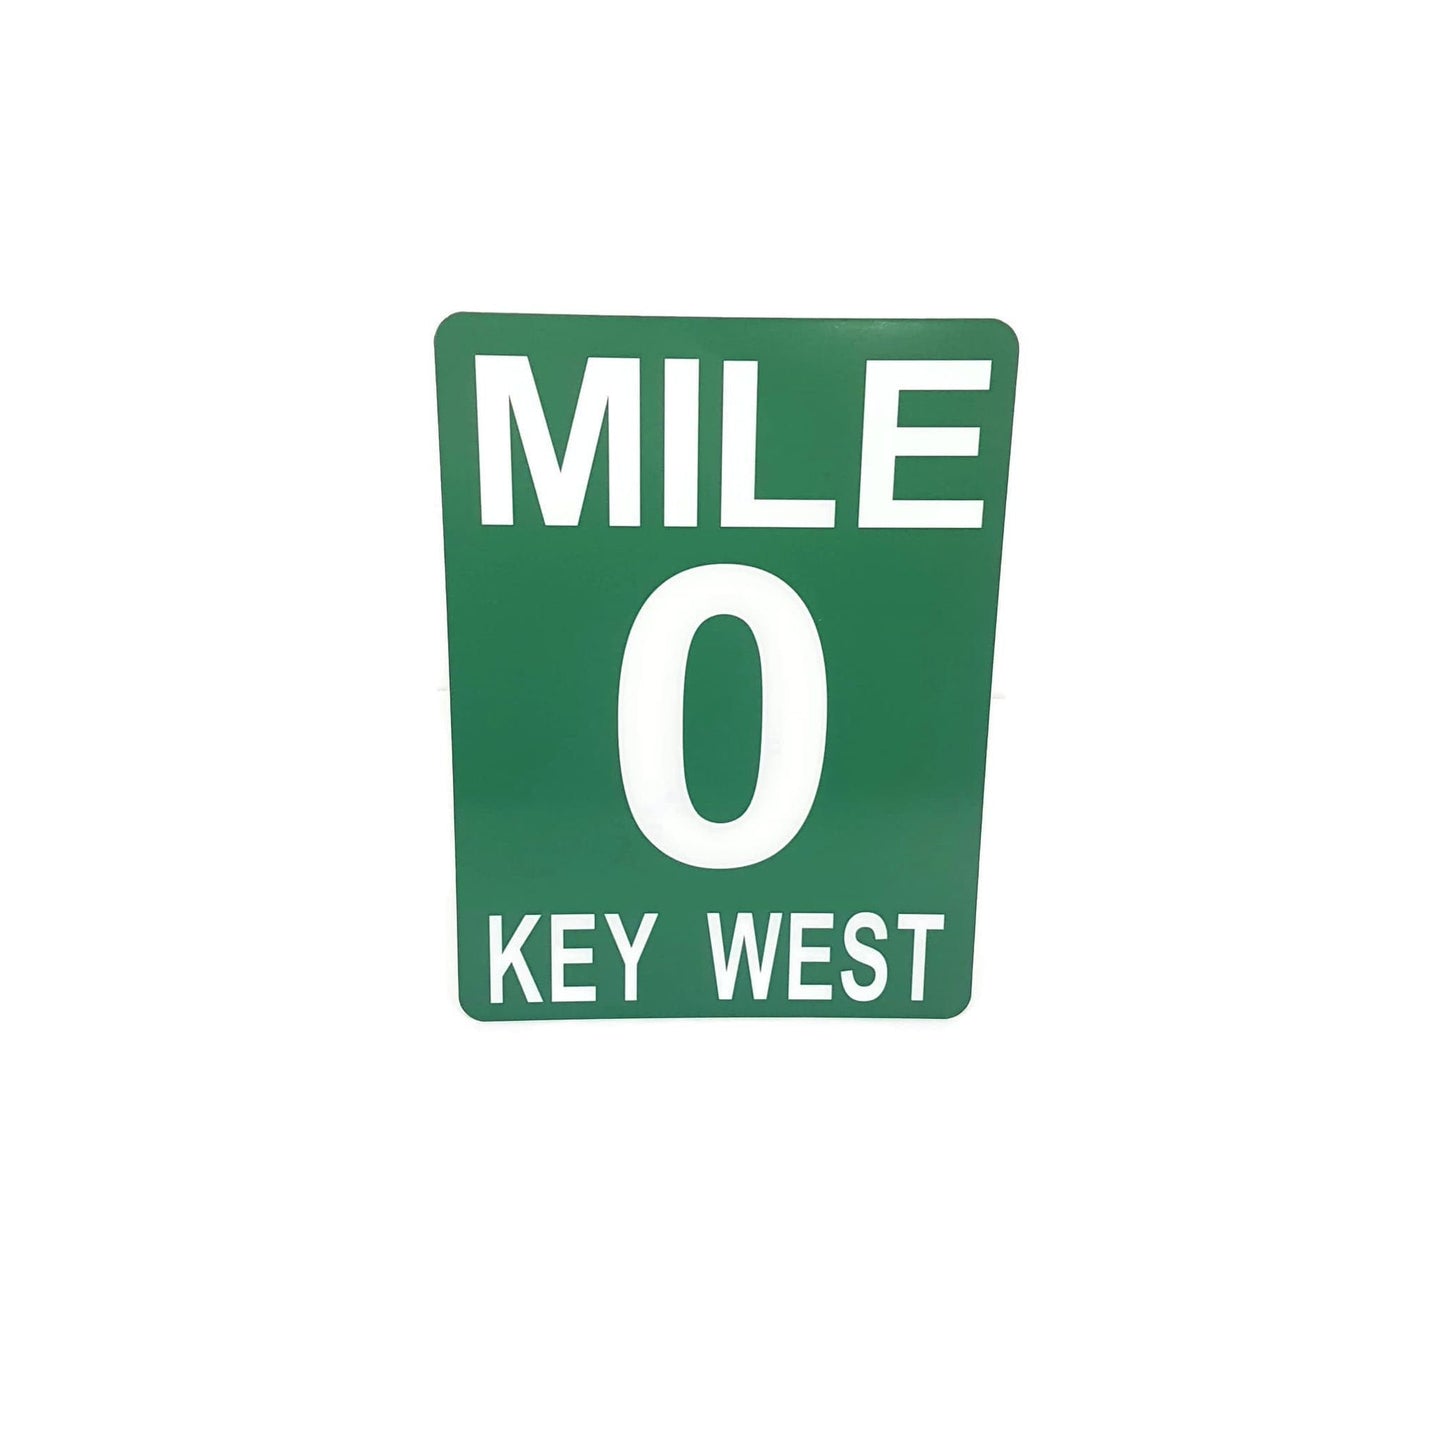 mile zero key west road sign